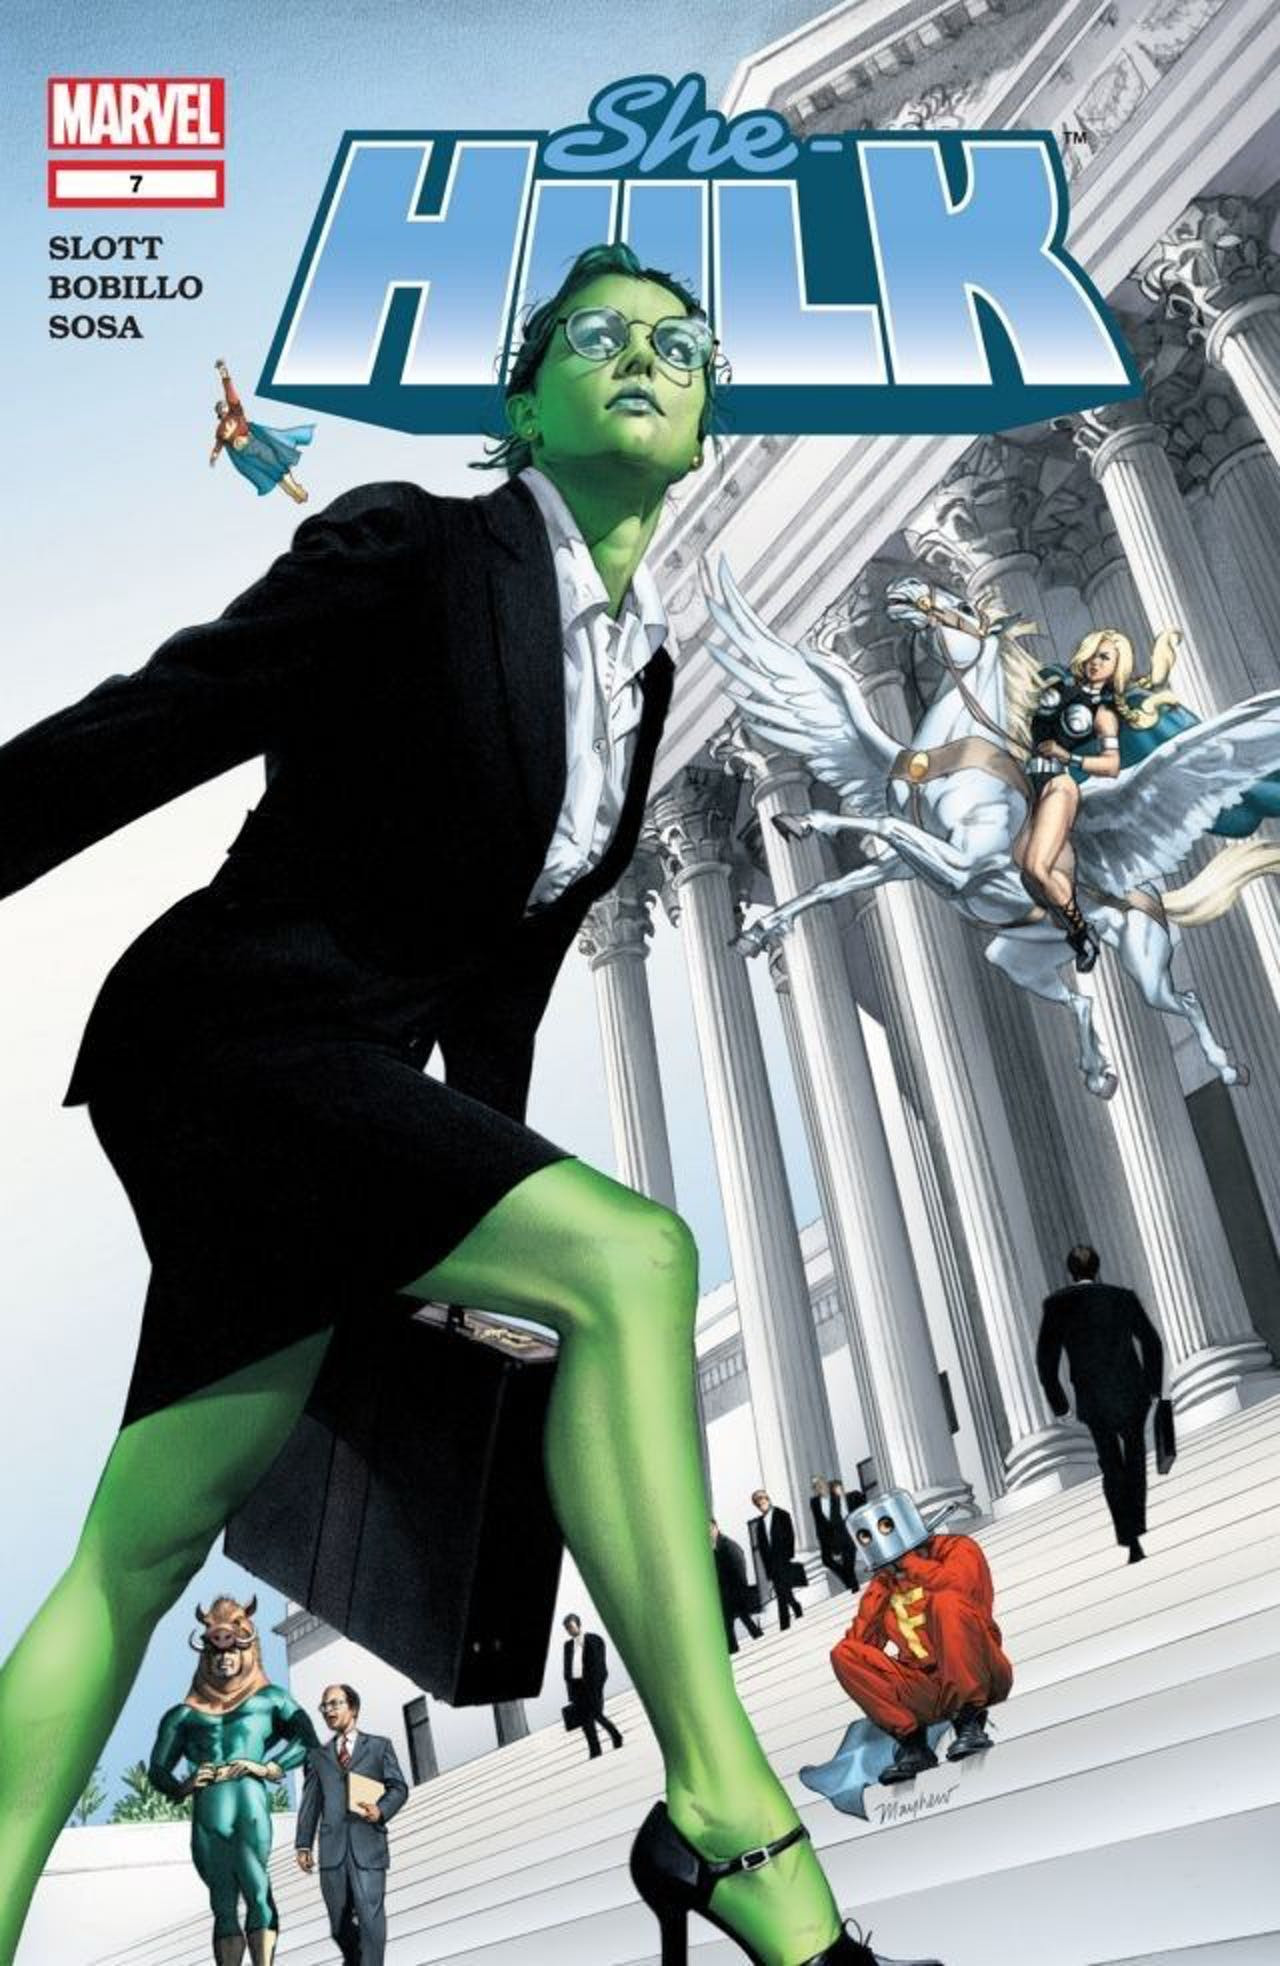 Marvel evreninde 3 yeni süper kahraman: Ms. Marvel, Moon Knight ve She-Hulk - Resim: 2